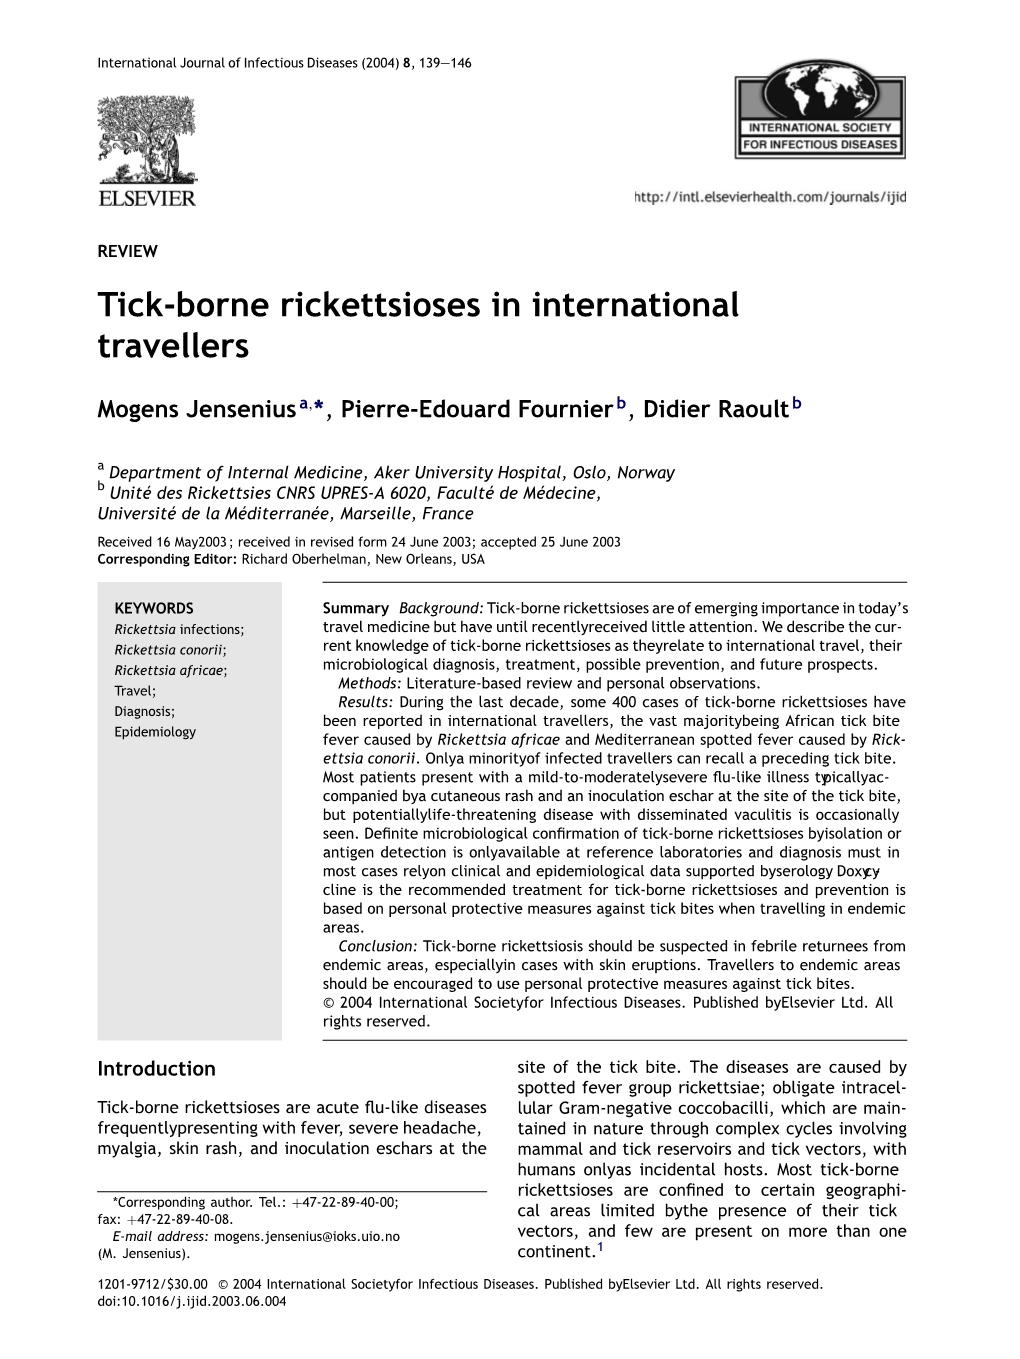 Tick-Borne Rickettsioses in International Travellers